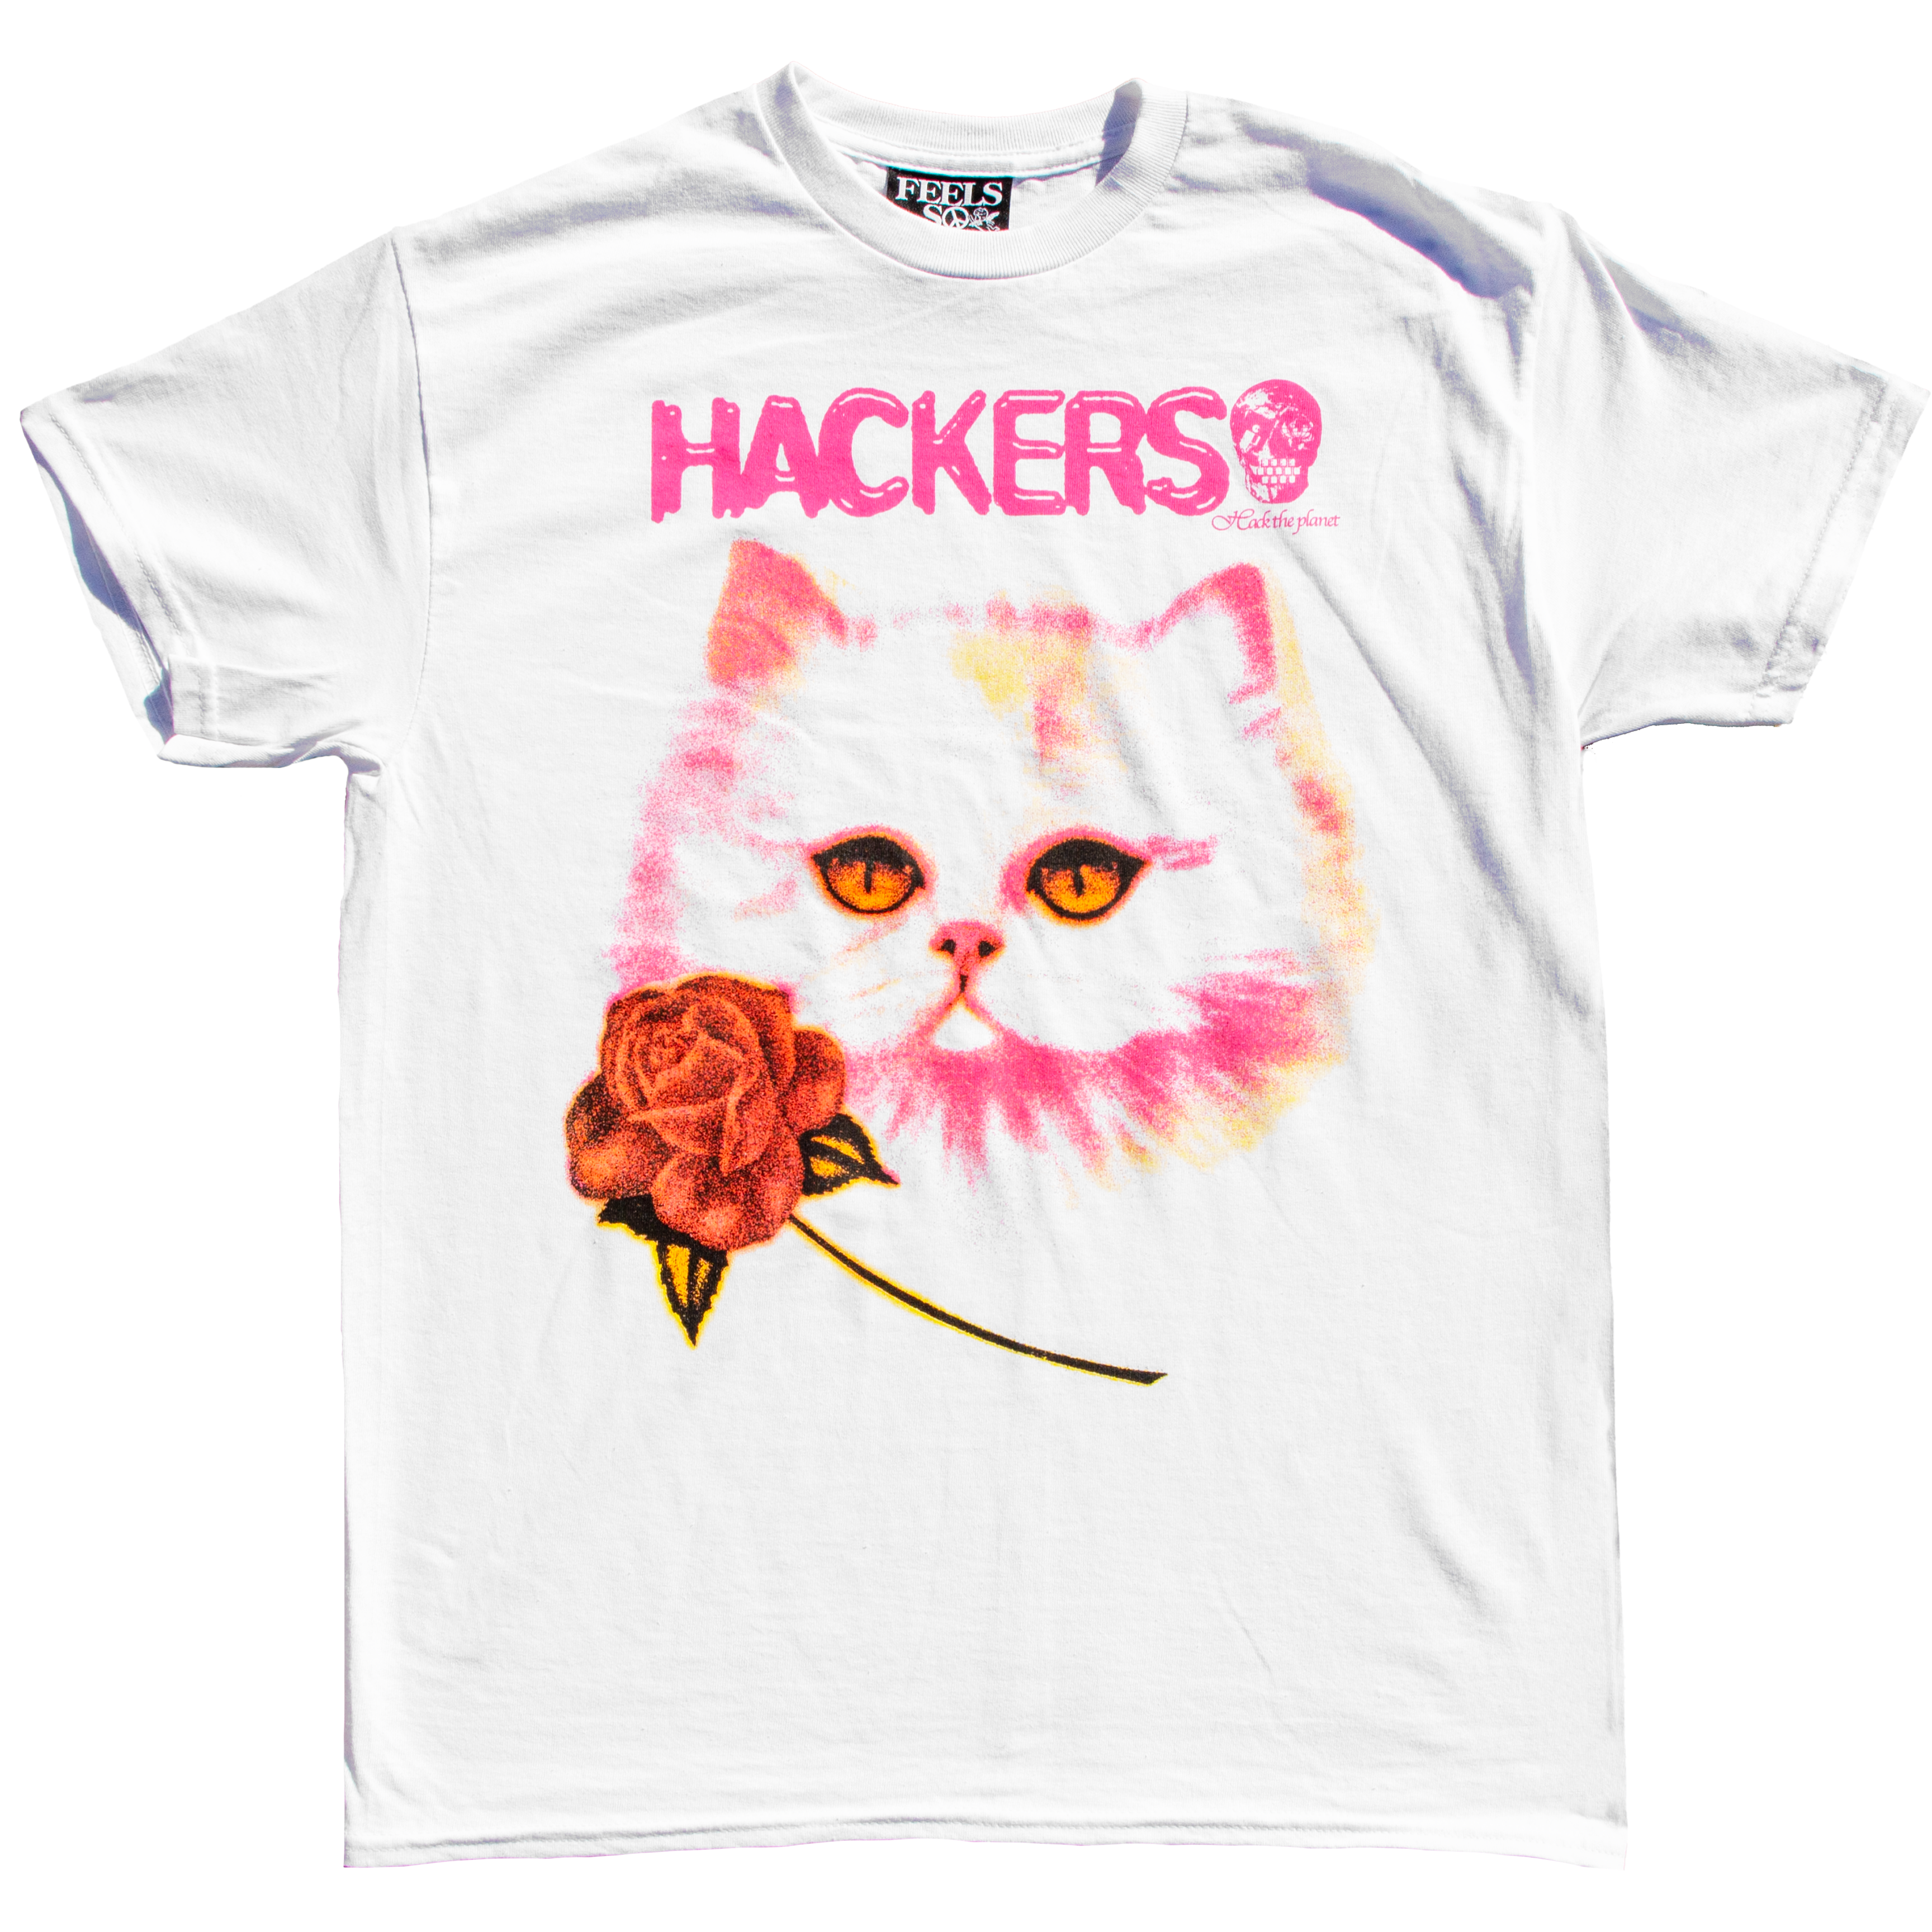 Best Hacker Ever T Shirt For Hackers' Bandana